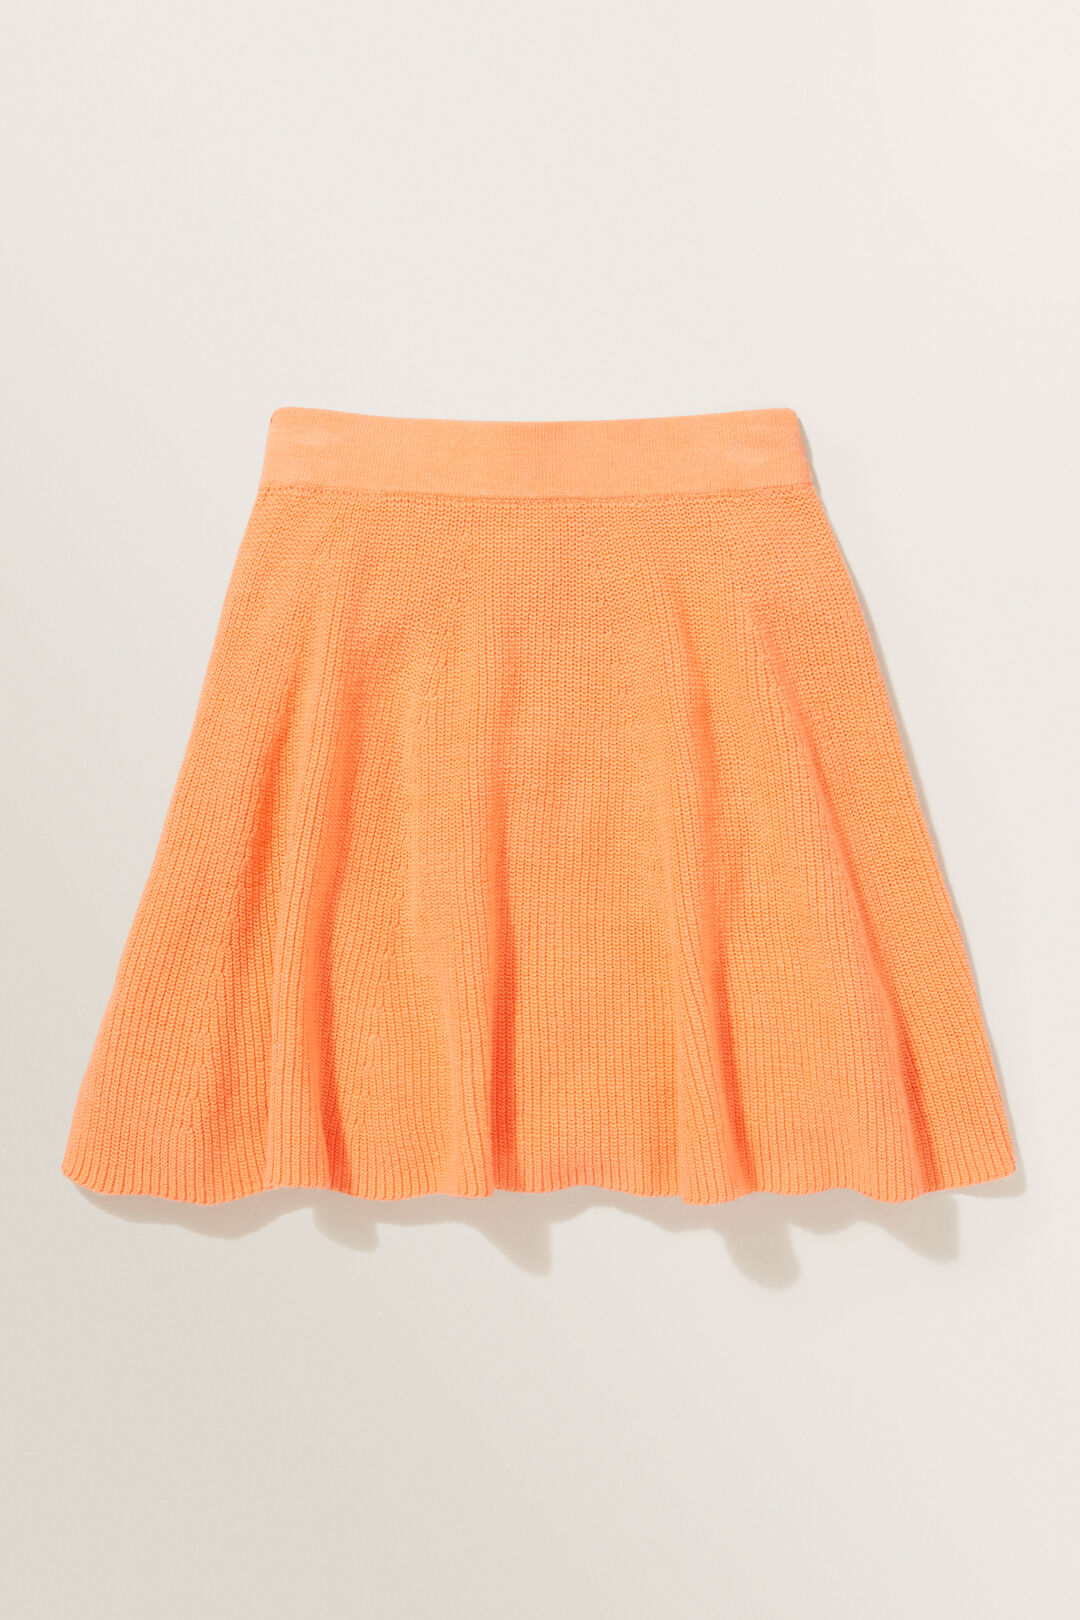 Knit Skirt  Apricot  hi-res